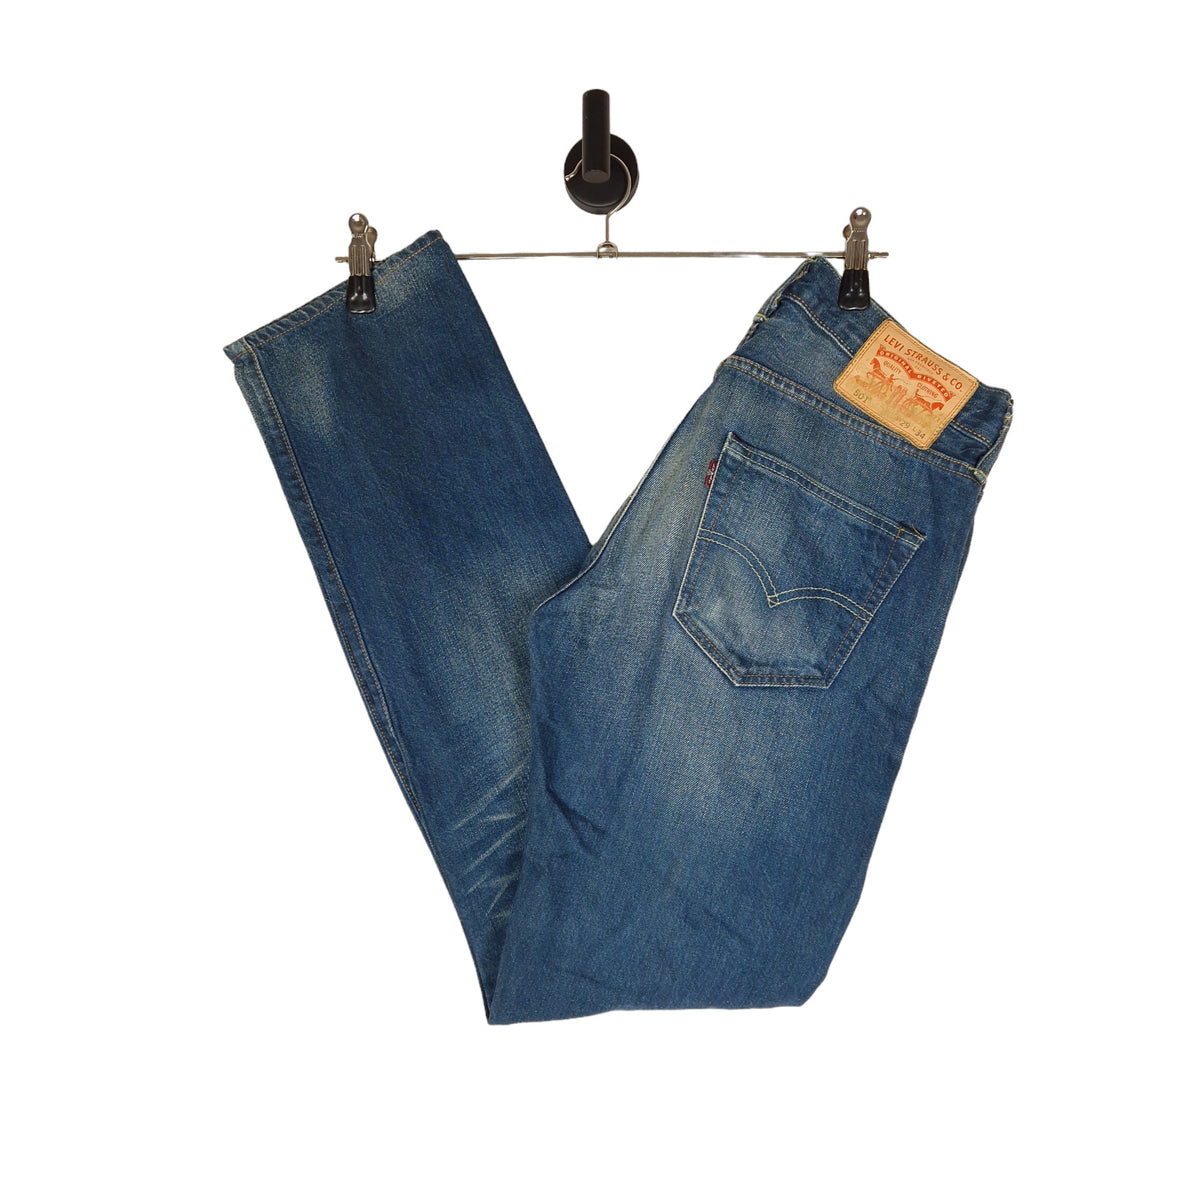 Levi's 501's Denim Jeans - Size W29 L34